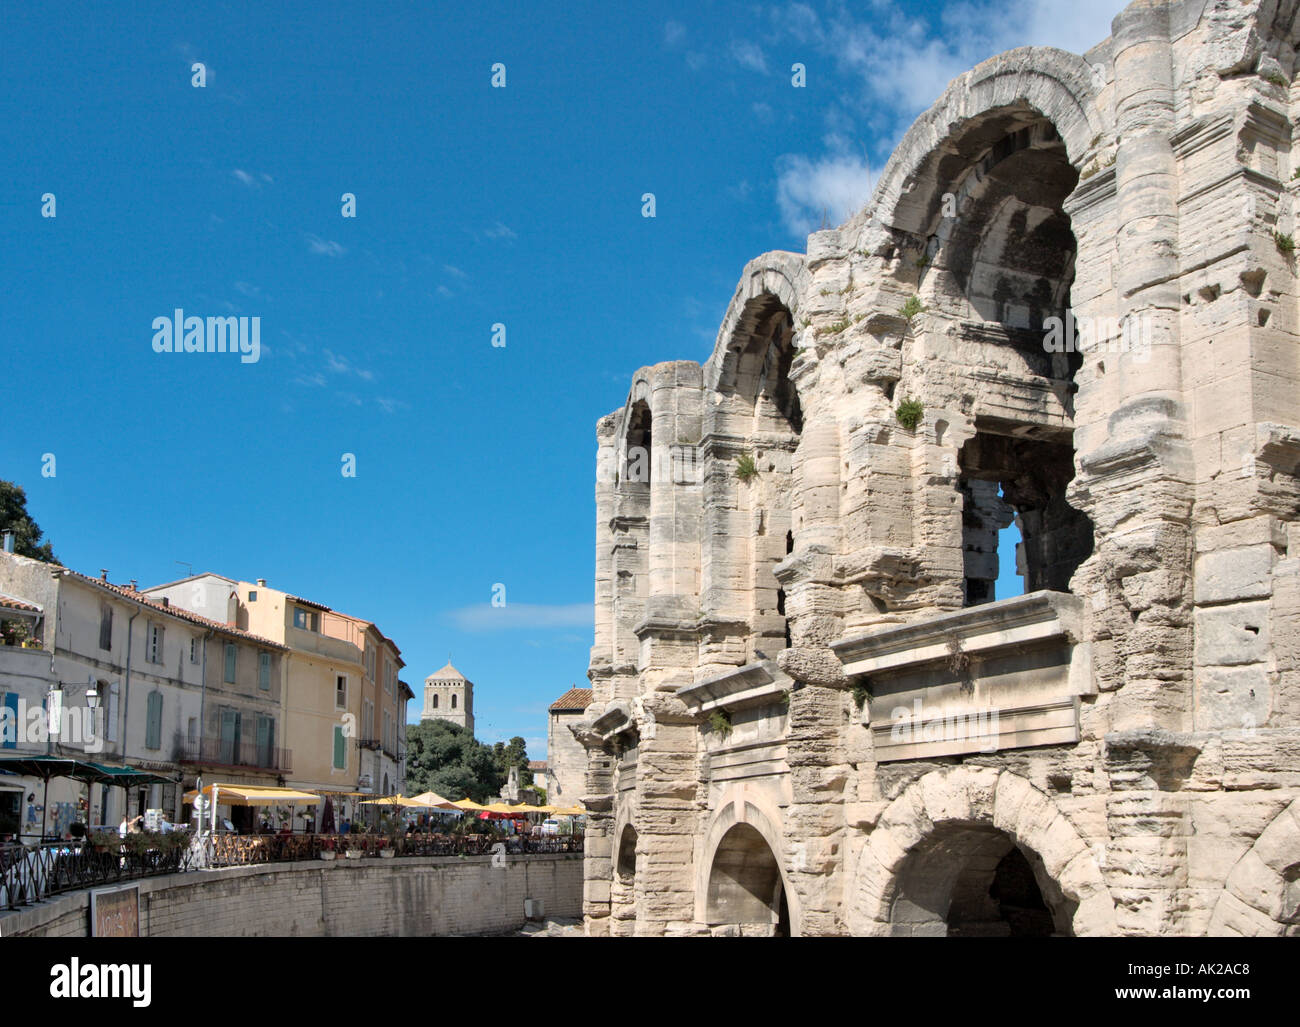 Les Arenes Arles (Amphitheater), Arles, Provence, Frankreich Stockfoto